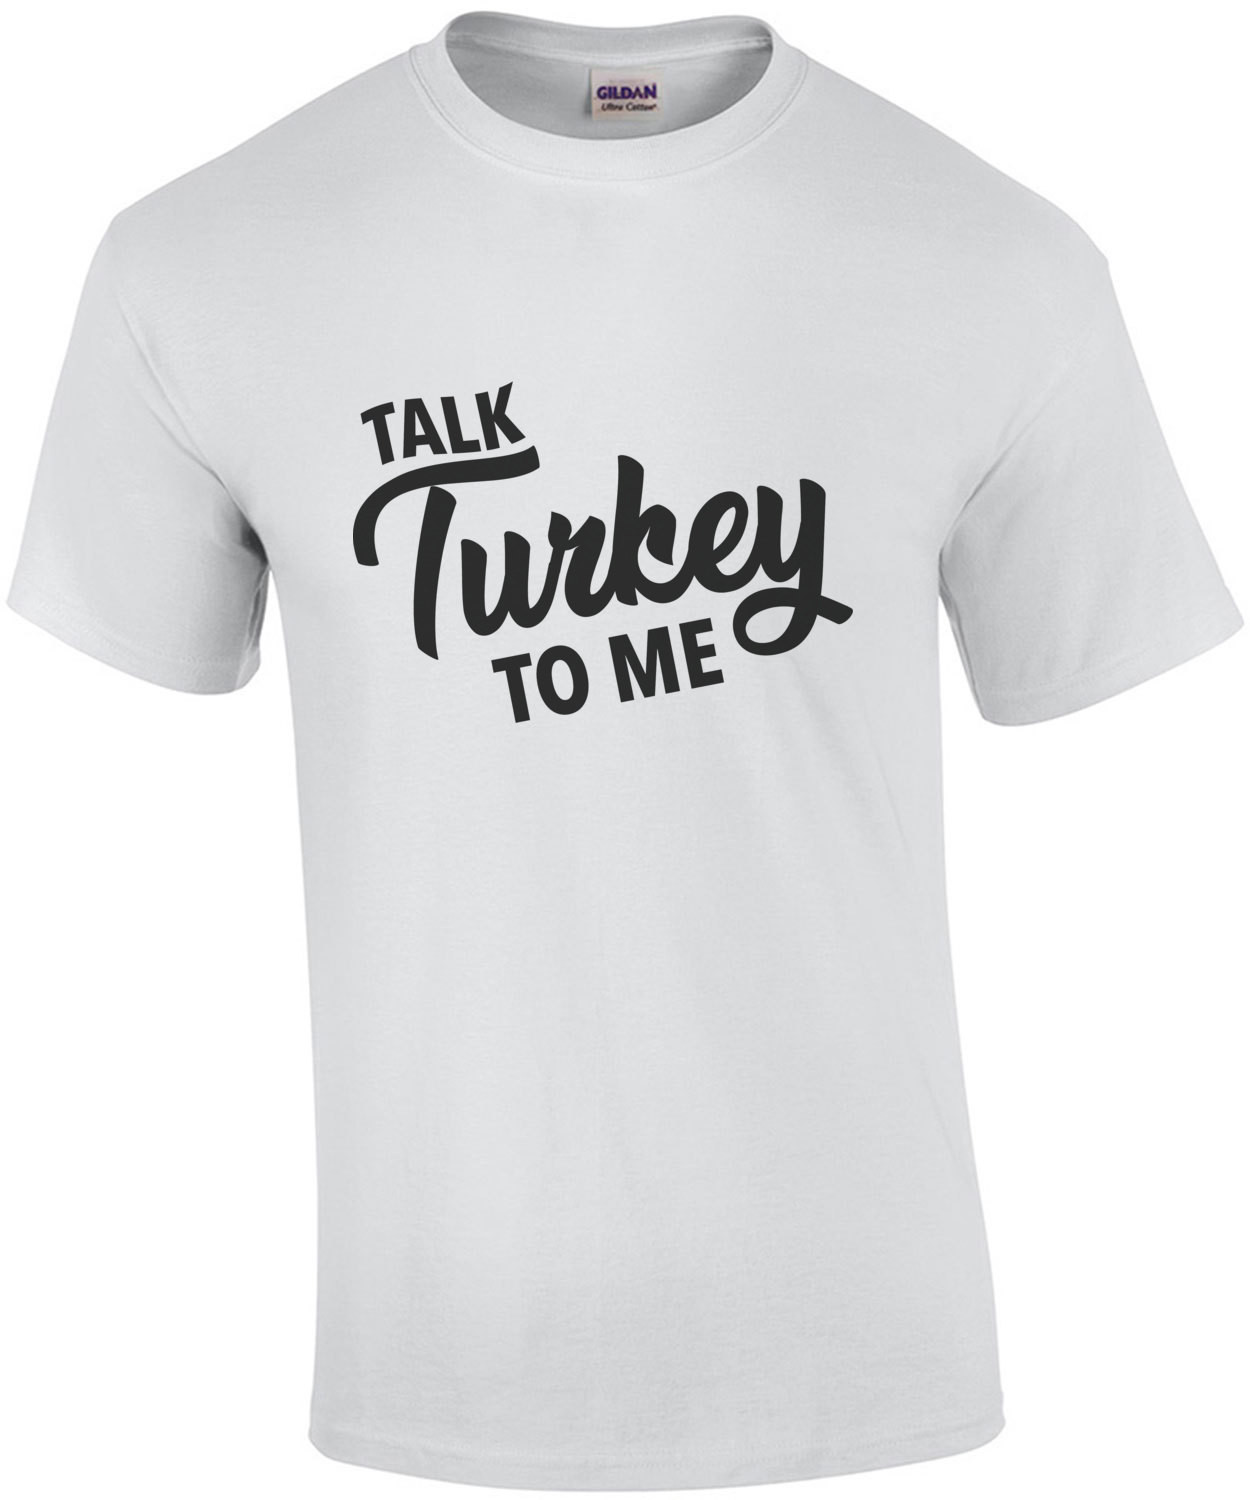 Talk turkey to me - thanksgiving t-shirt